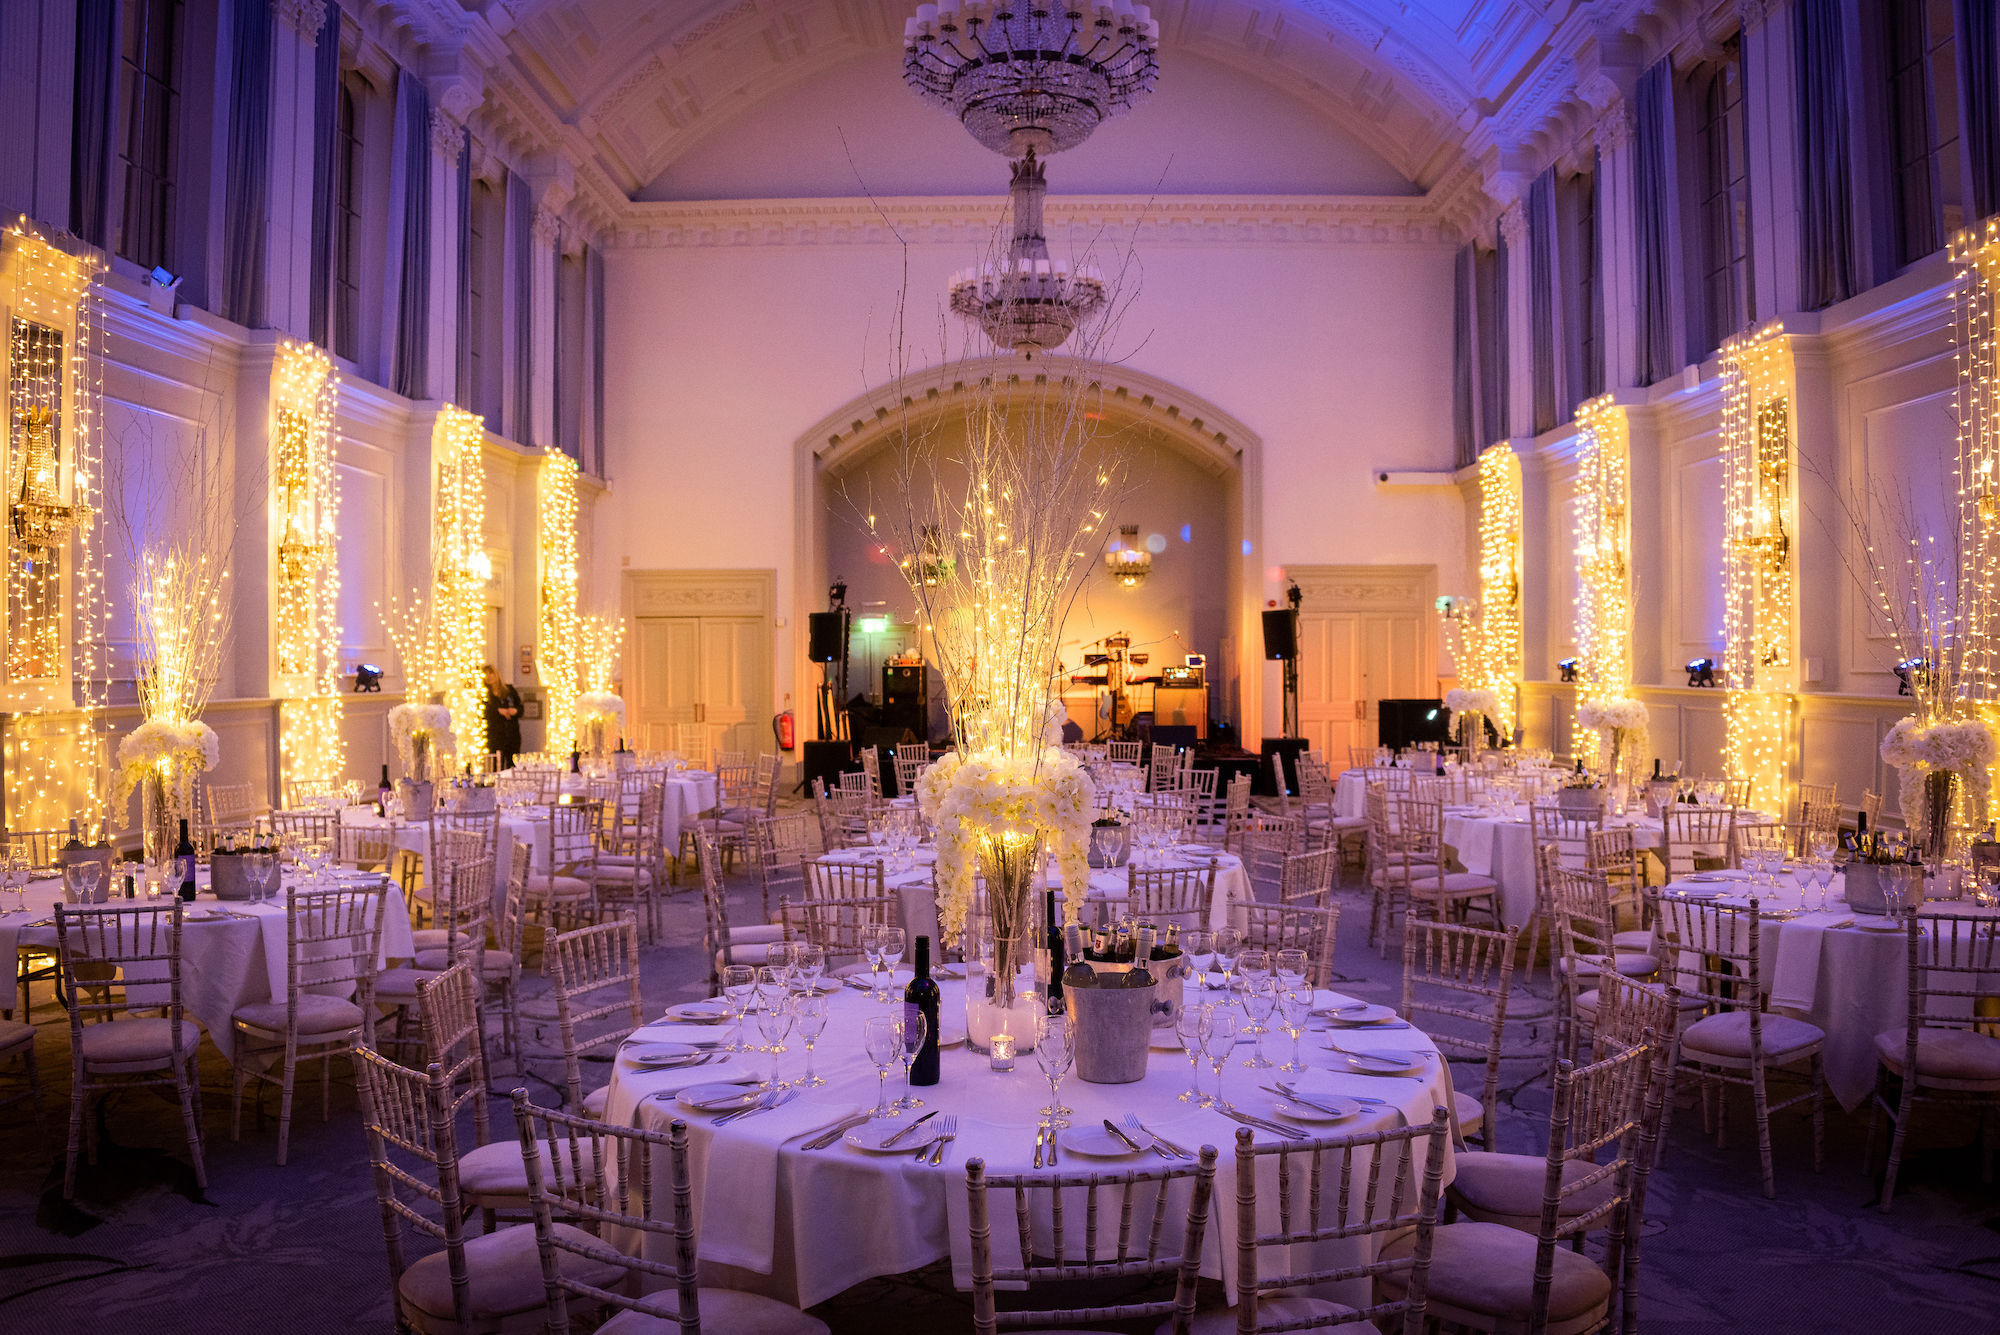 Brighton Wedding venues - The Clarence Room at the Brighton Hilton Metropole